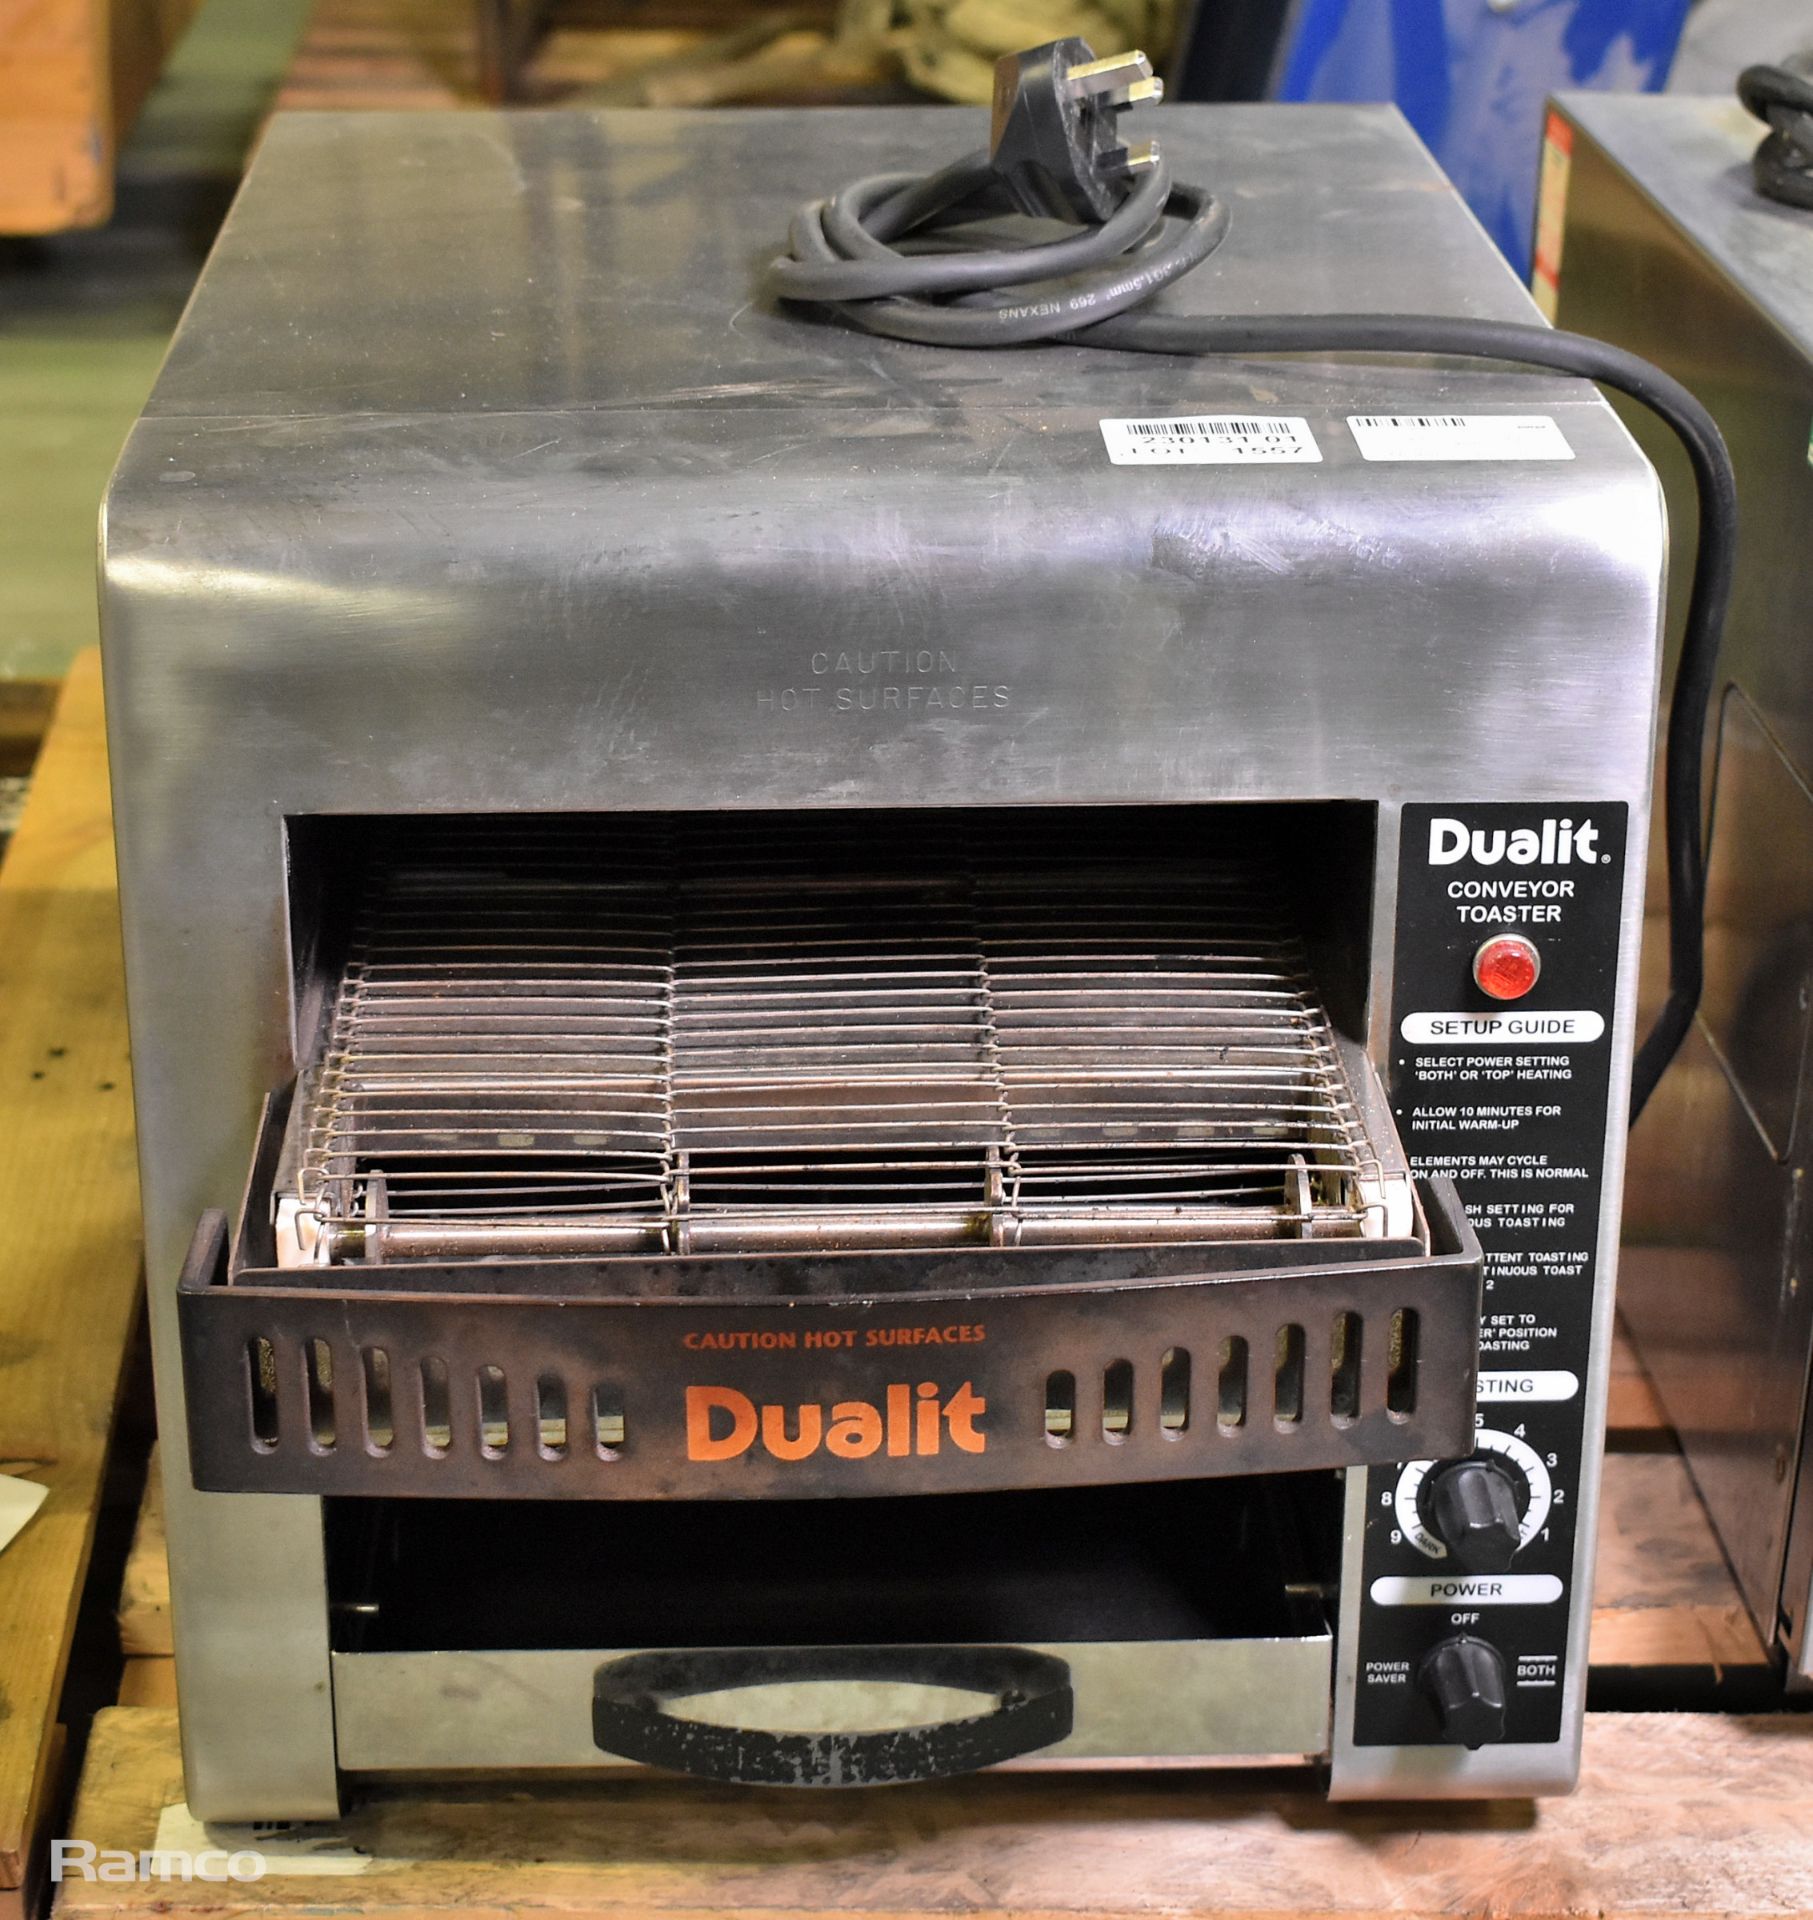 Dualit DCT2T conveyor toaster